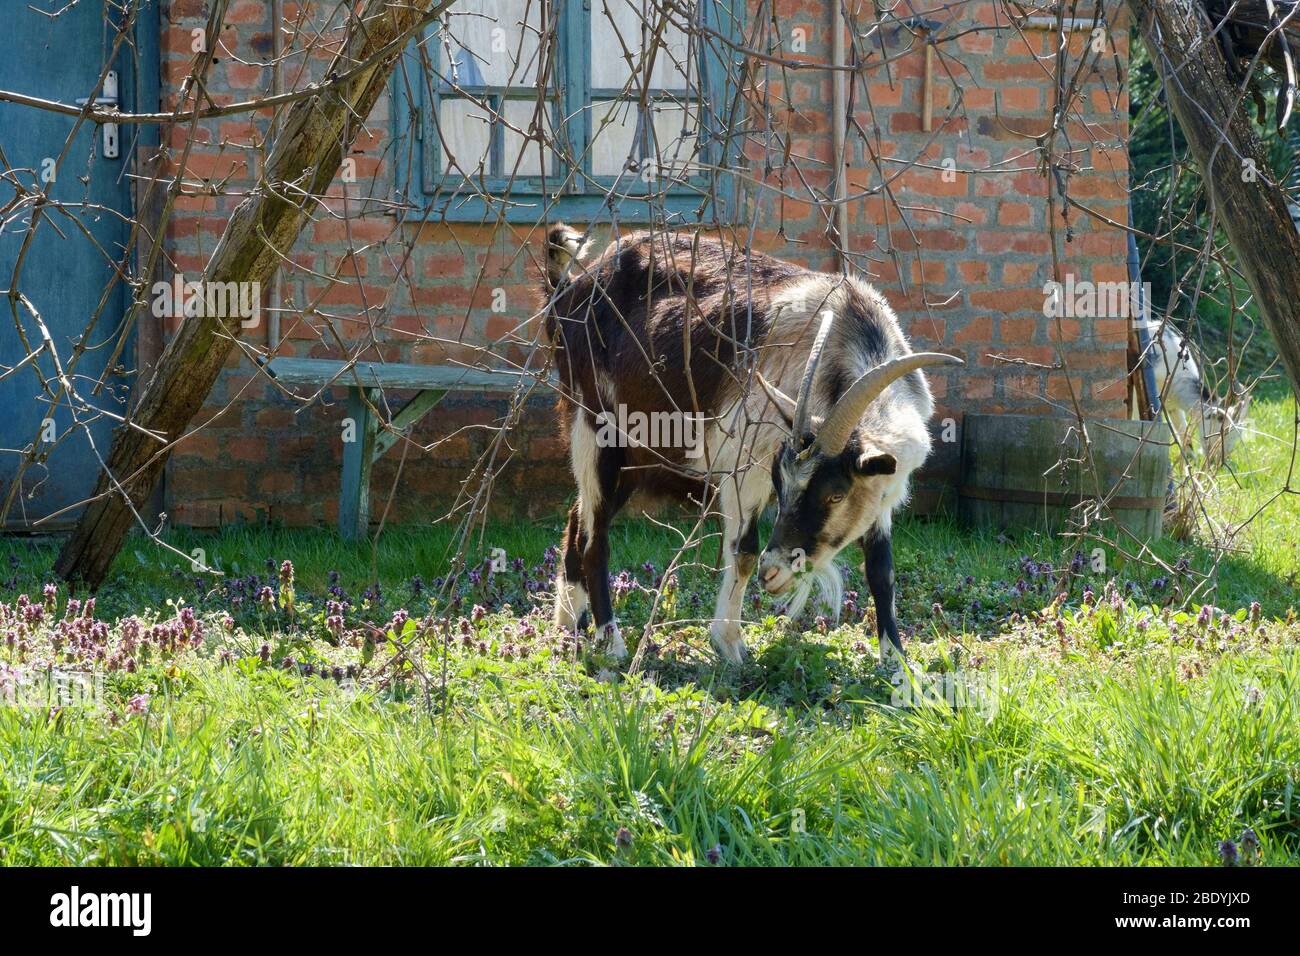 domestic goat standing in a rural garden zala county hungary Stock Photo